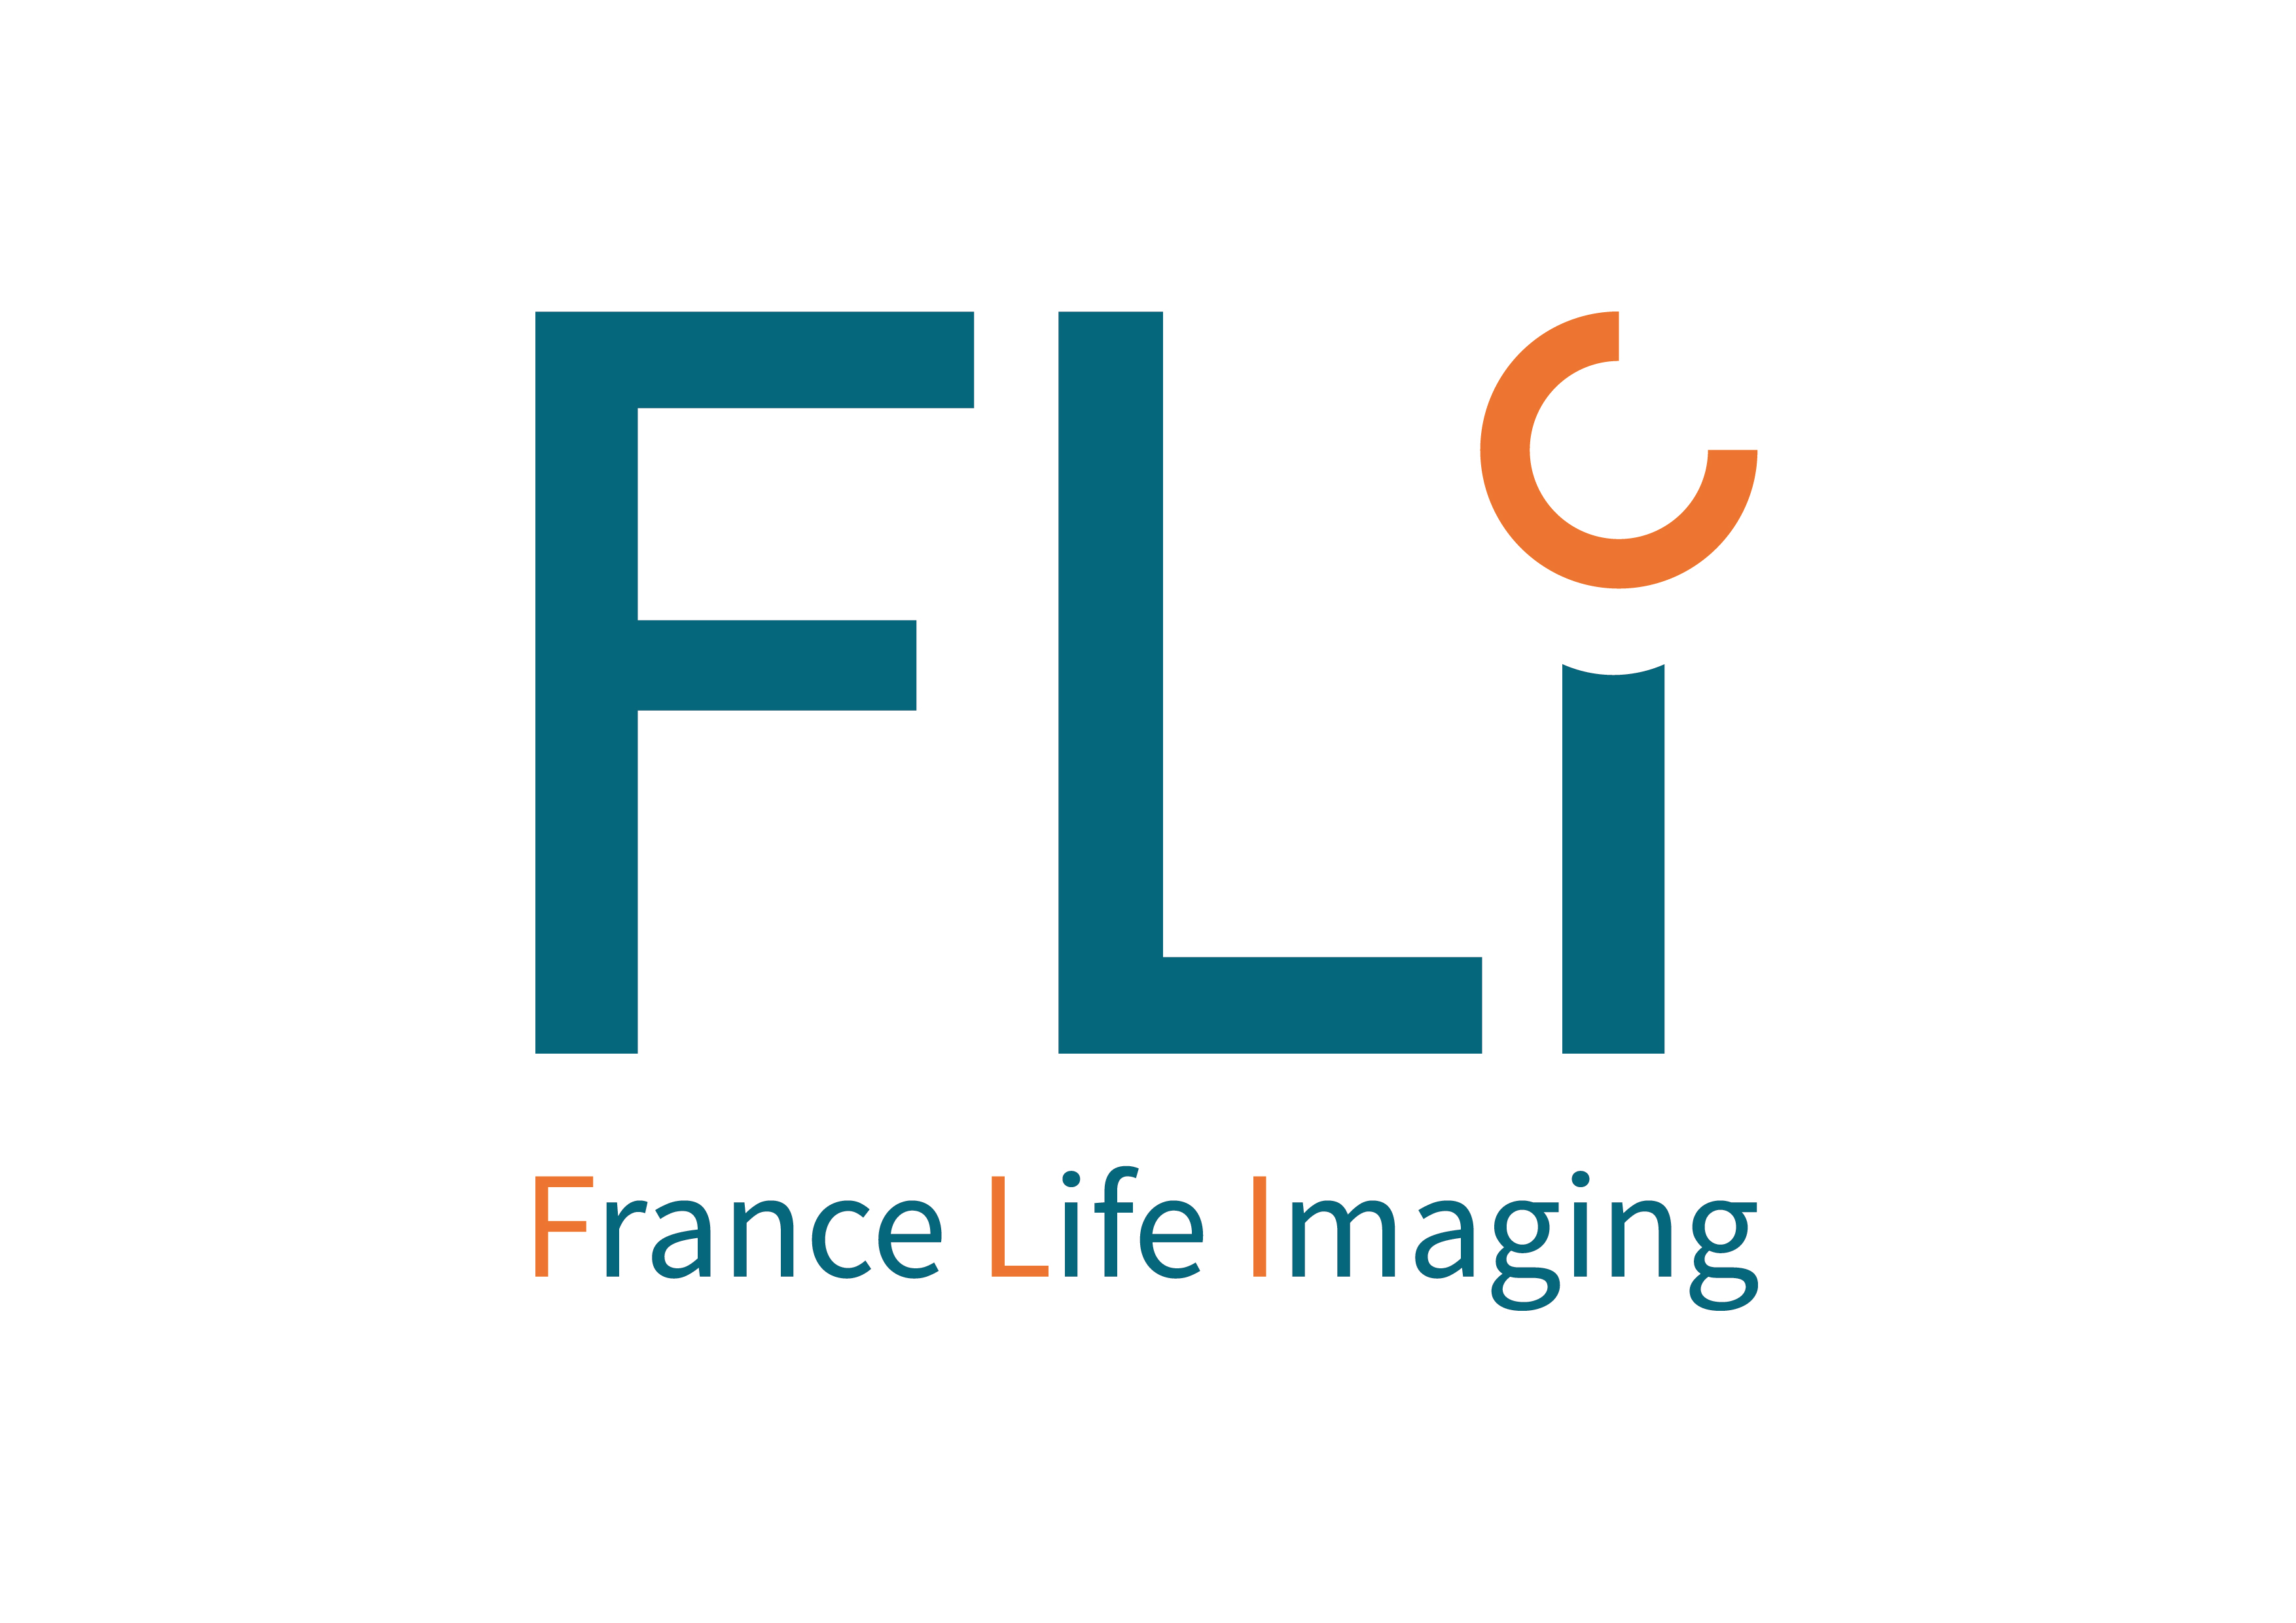 France Life Imaging